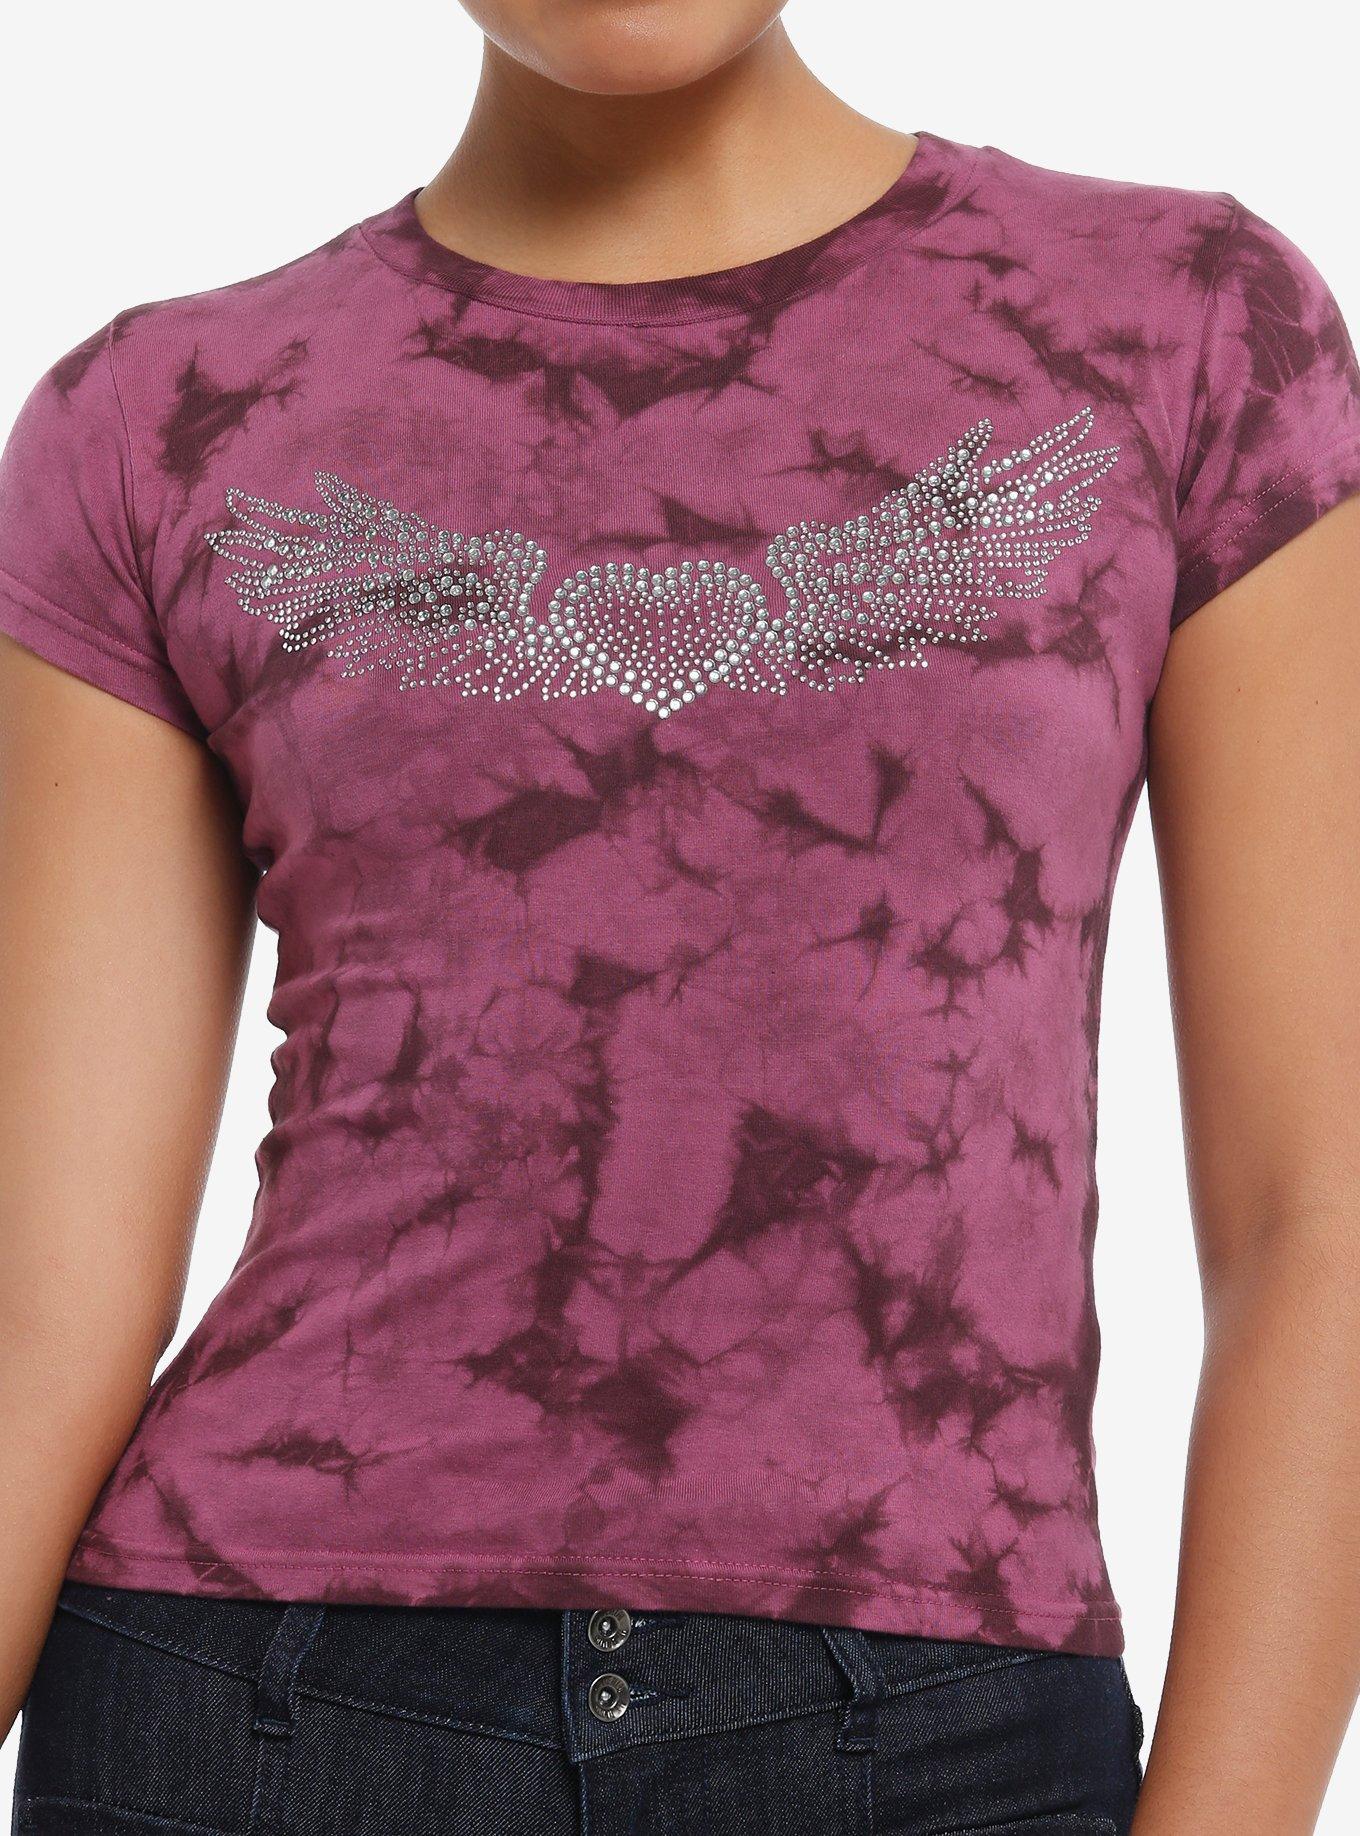 Winged Heart Rhinestone Pink Tie-Dye Girls Baby T-Shirt, PINK, hi-res